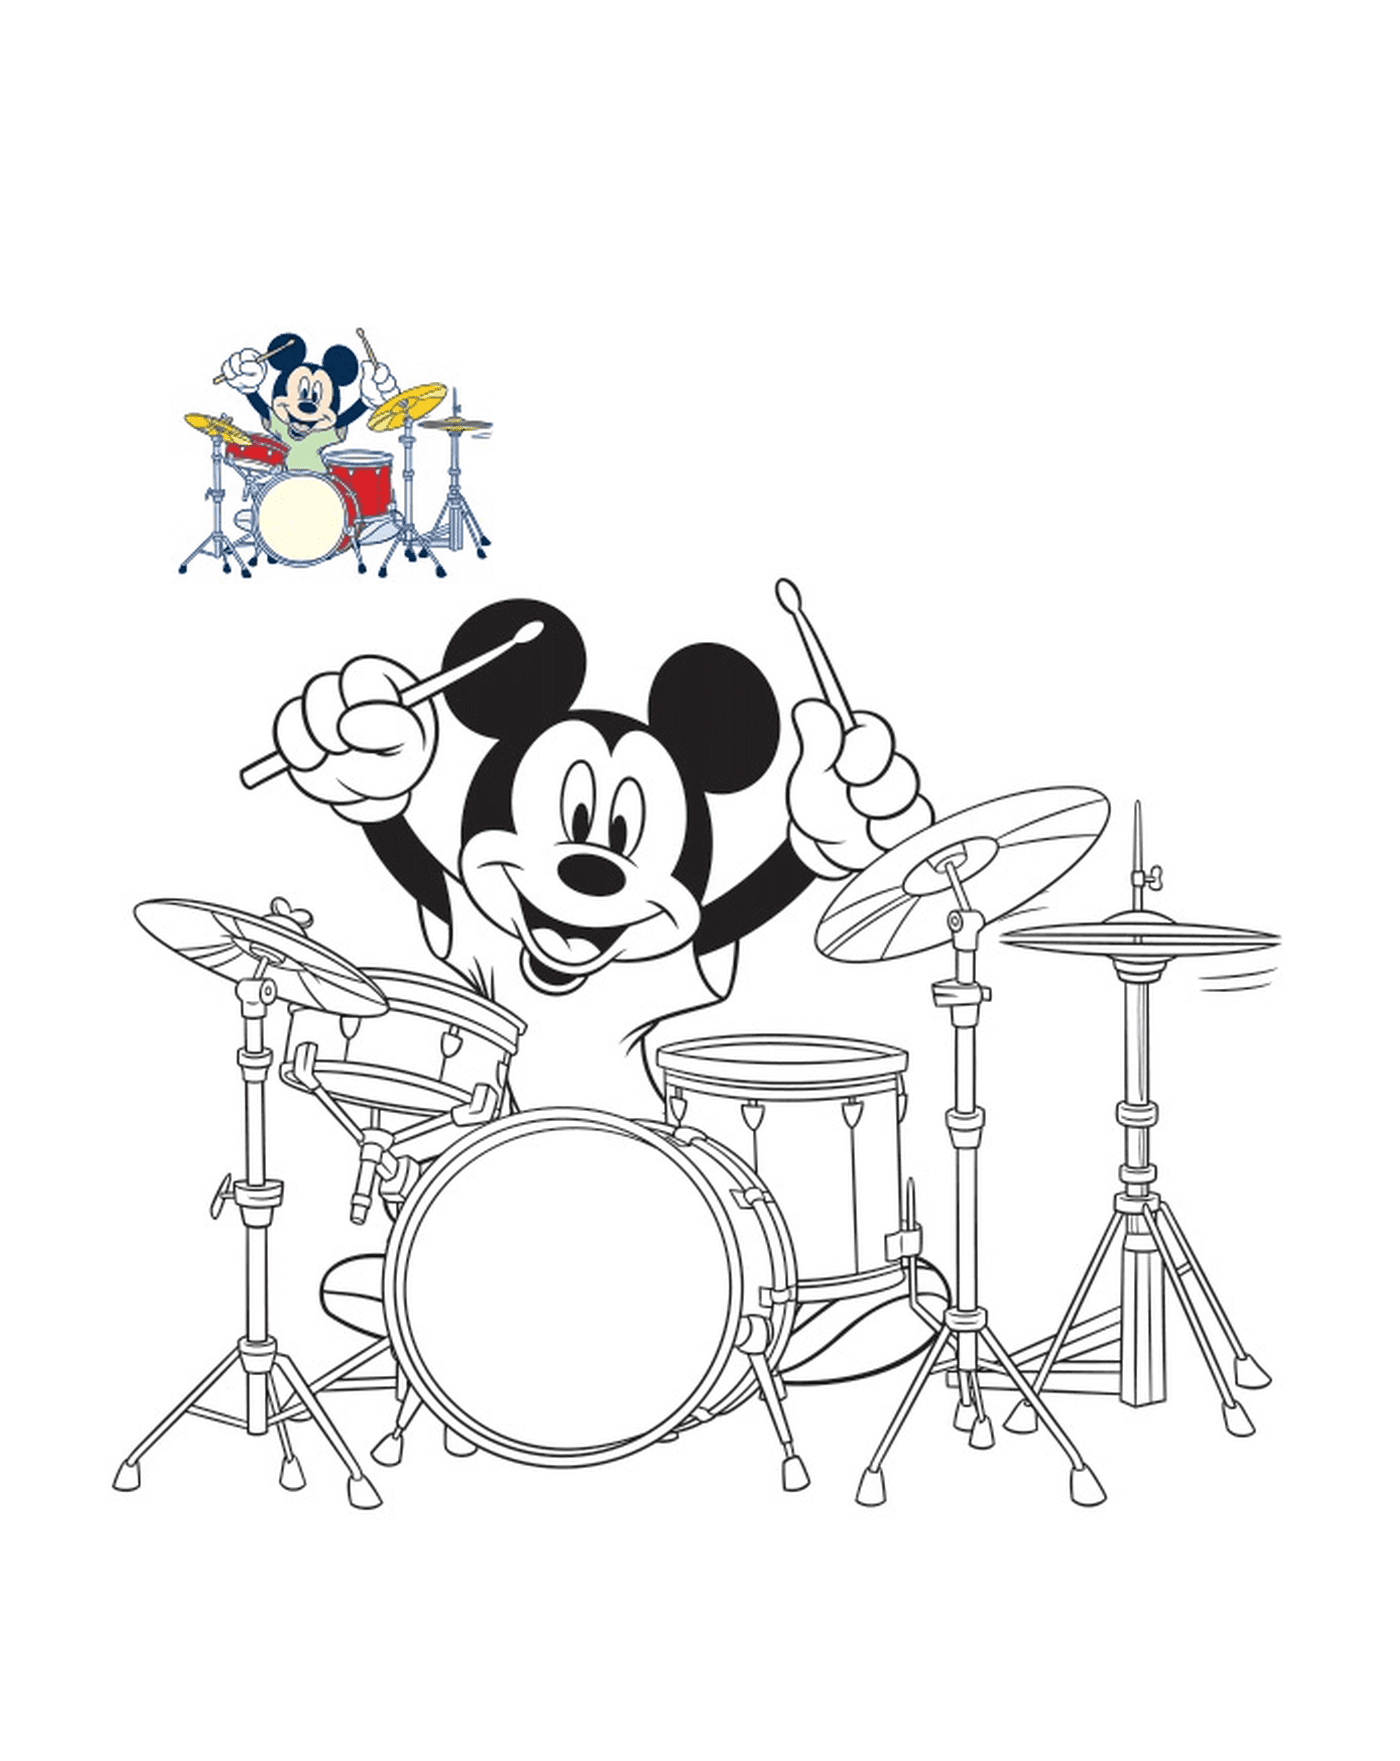  Микки Маус играет на барабанах 